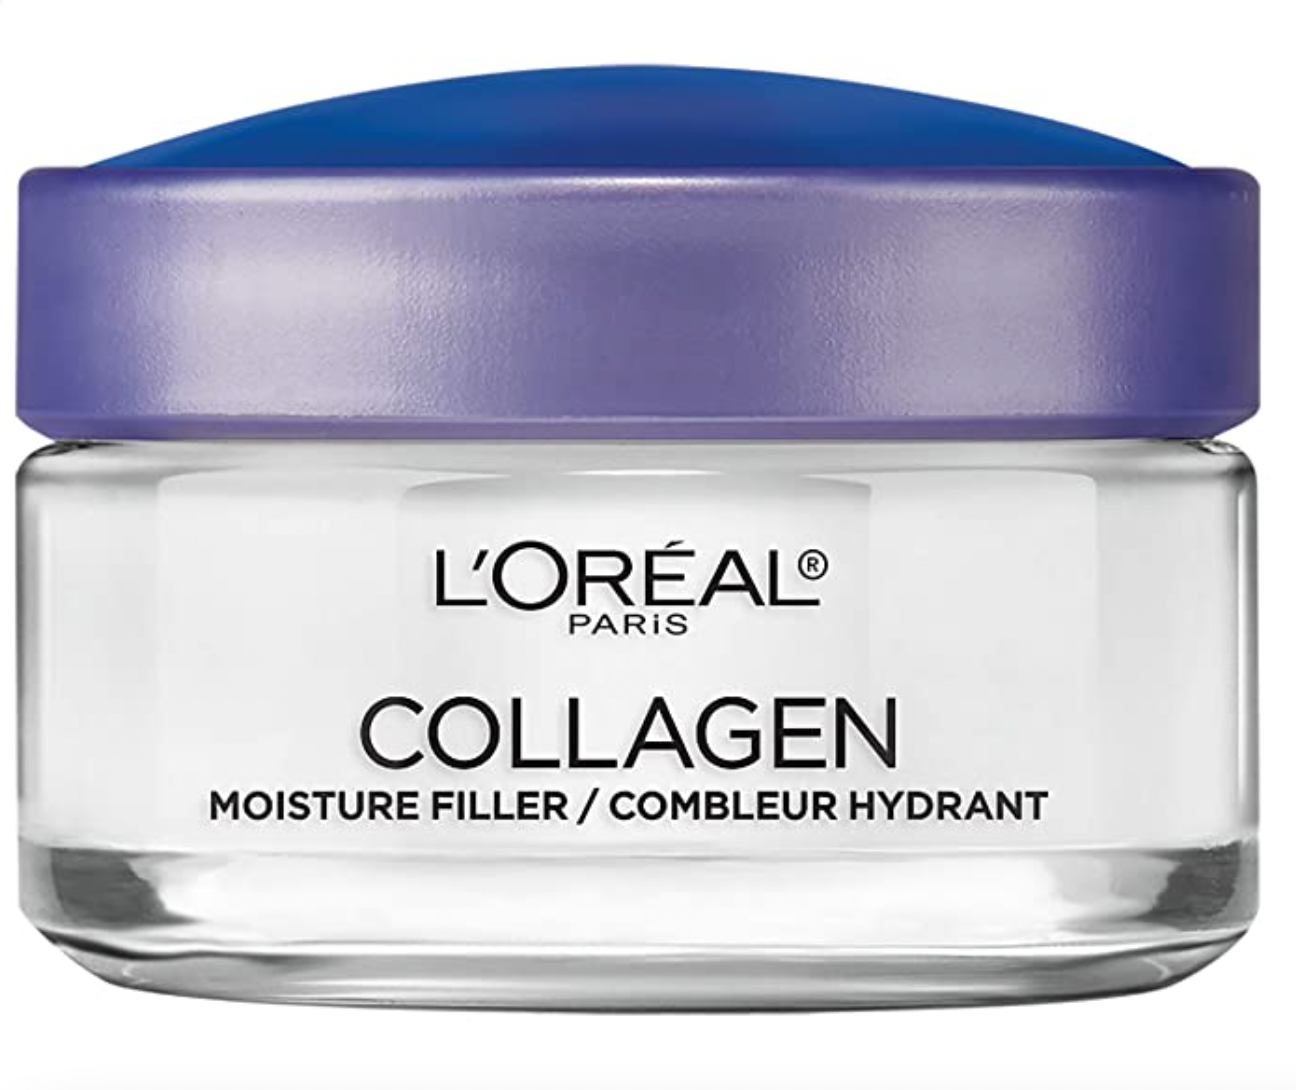 L'Oreal Paris Skincare Collagen Face Moisturizer